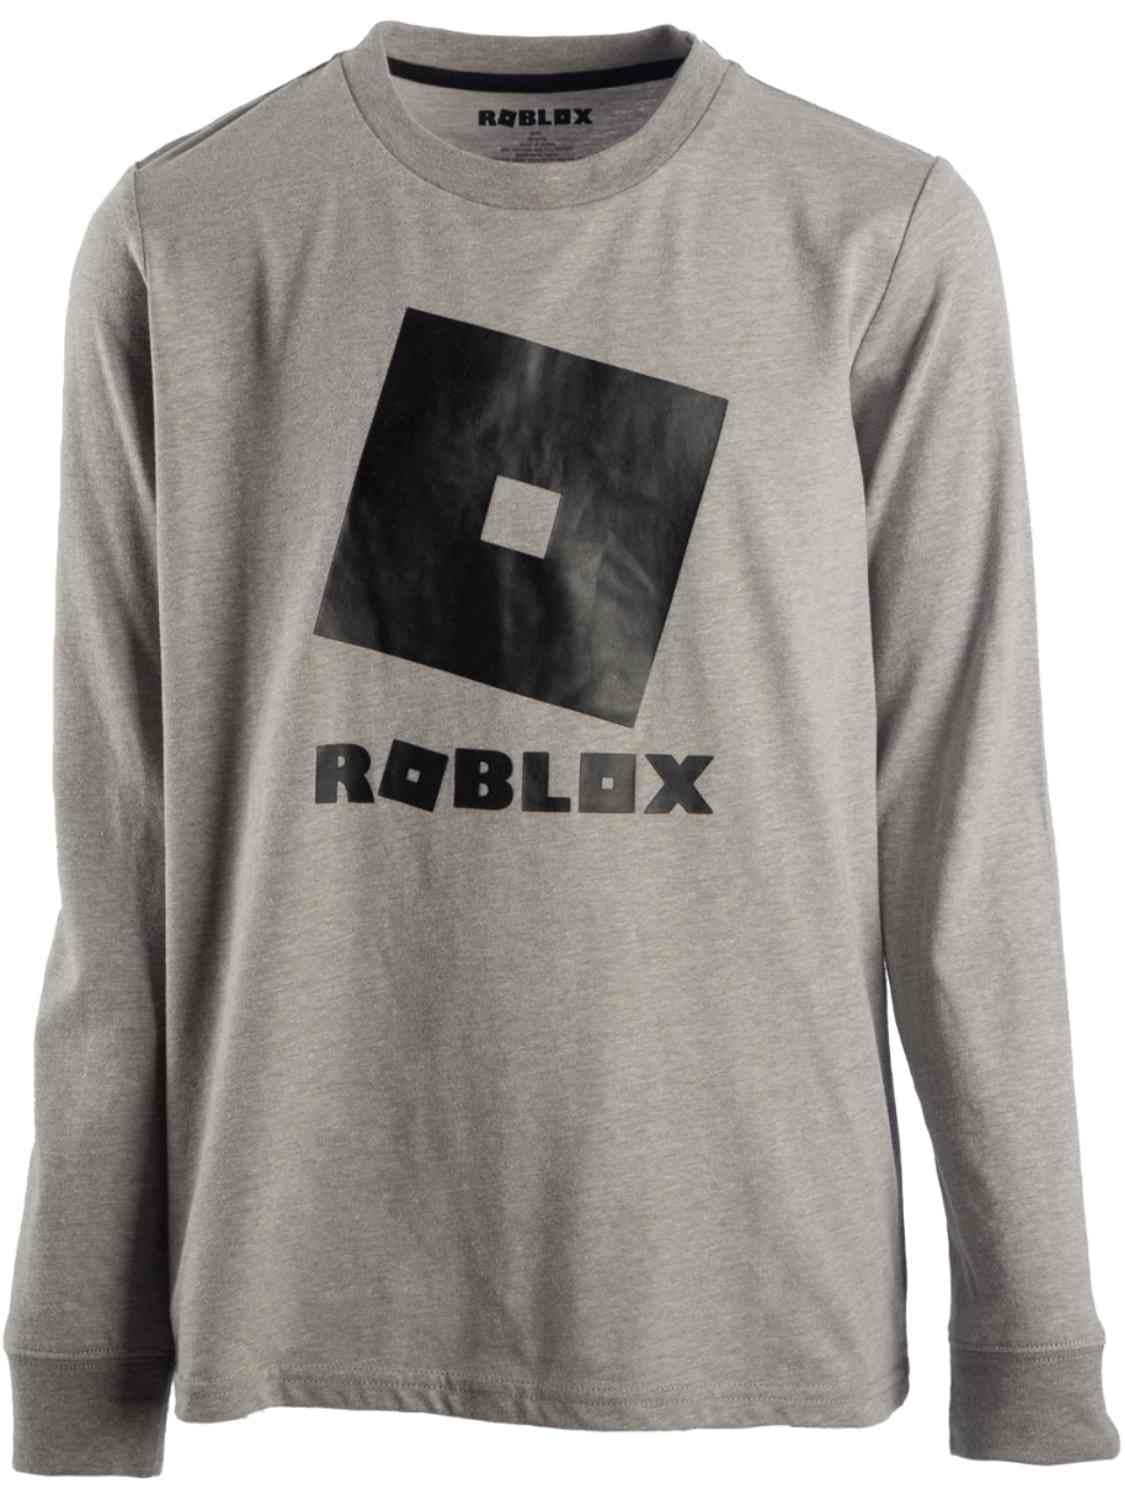 Roblox Boys Gray Black Roblox T Shirt Long Sleeve Tee Shirt Xxs 4 5 Walmart Com Walmart Com - chicken man fan t shirt roblox